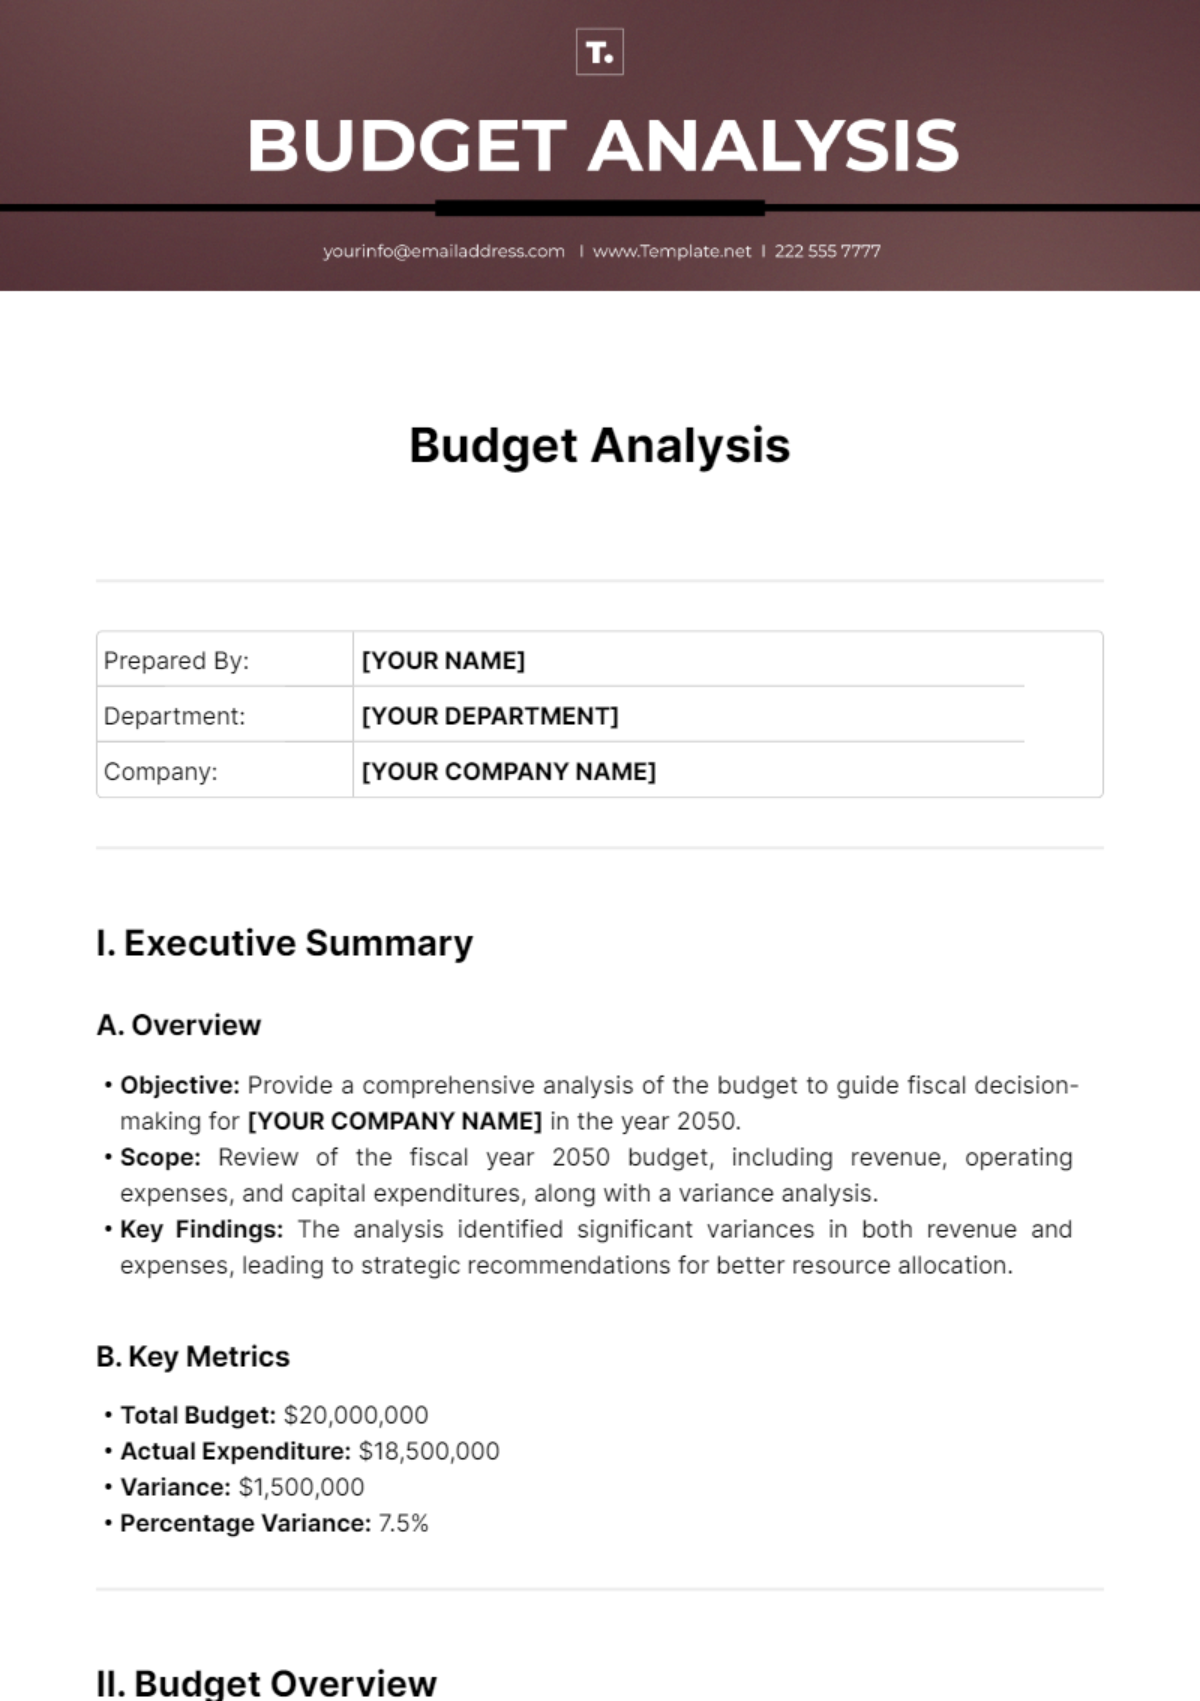 Budget Analysis Template